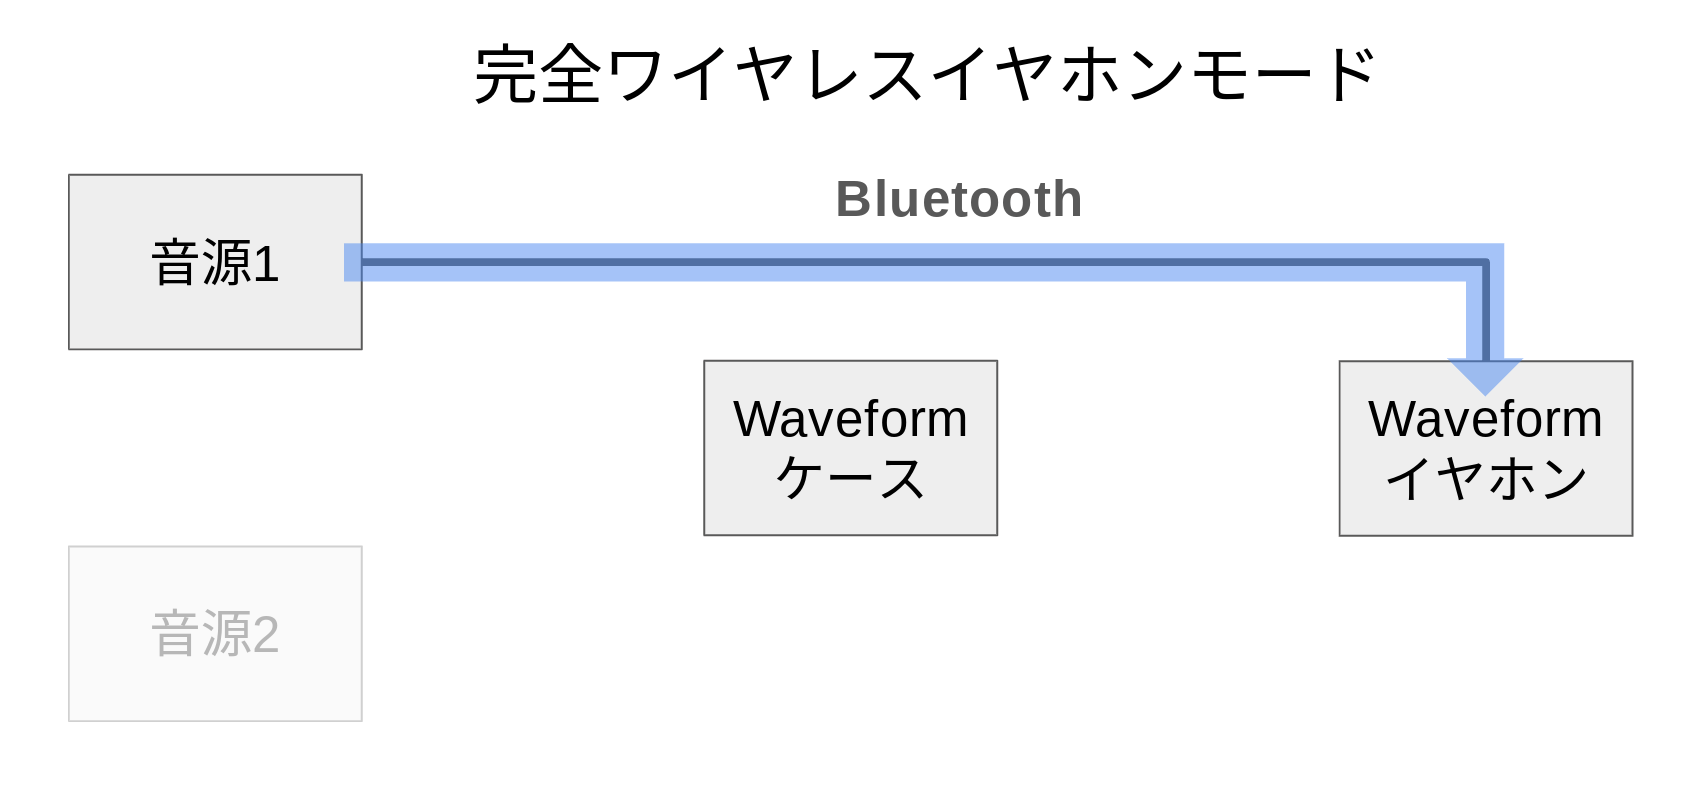 GENKI Waveformレビュー 接続系統図 Bluetooth完全ワイヤレスイヤホンモード